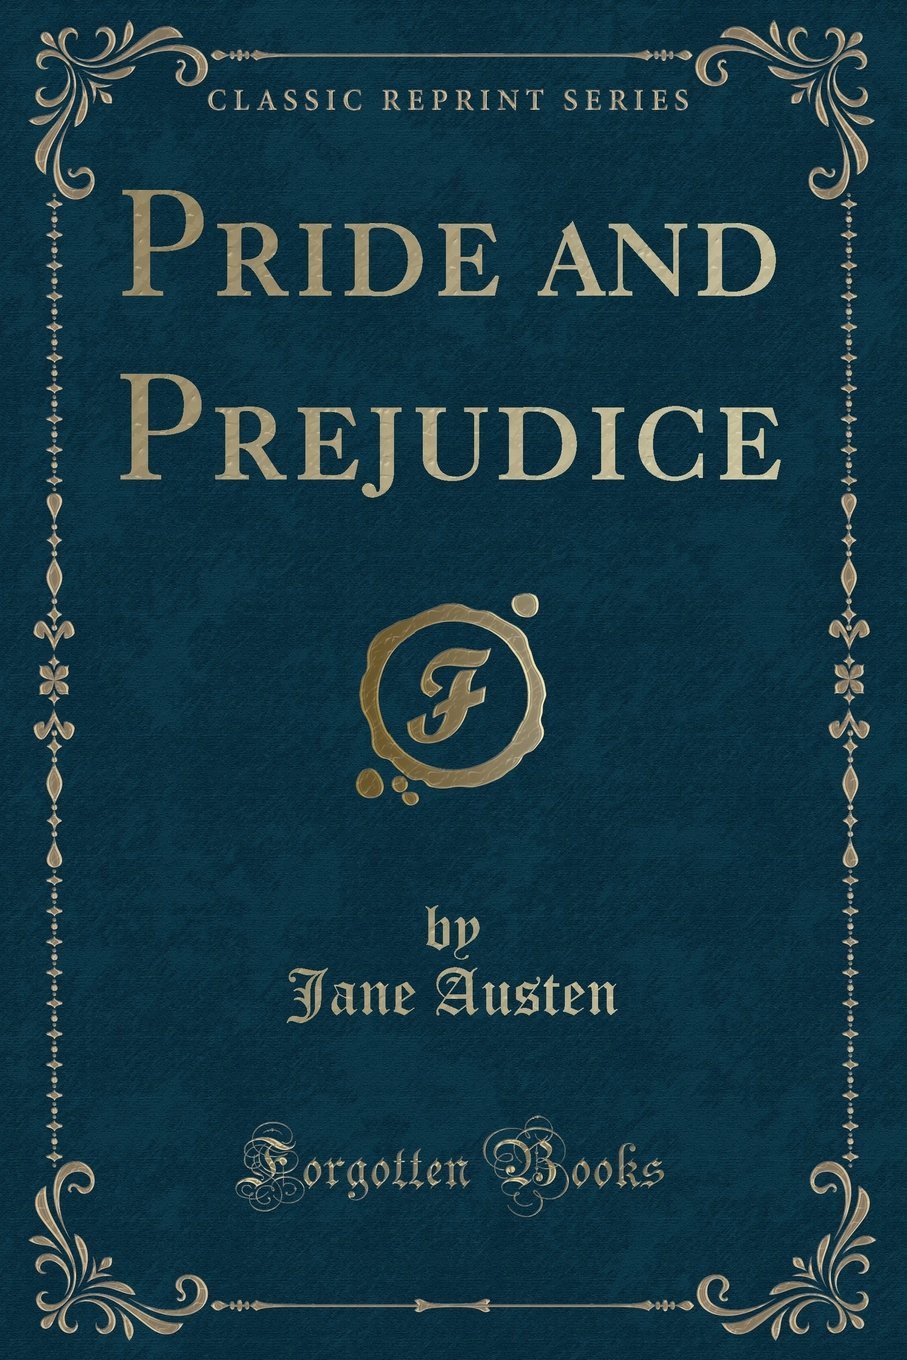 Austen, Pride and Prejudice.jpeg